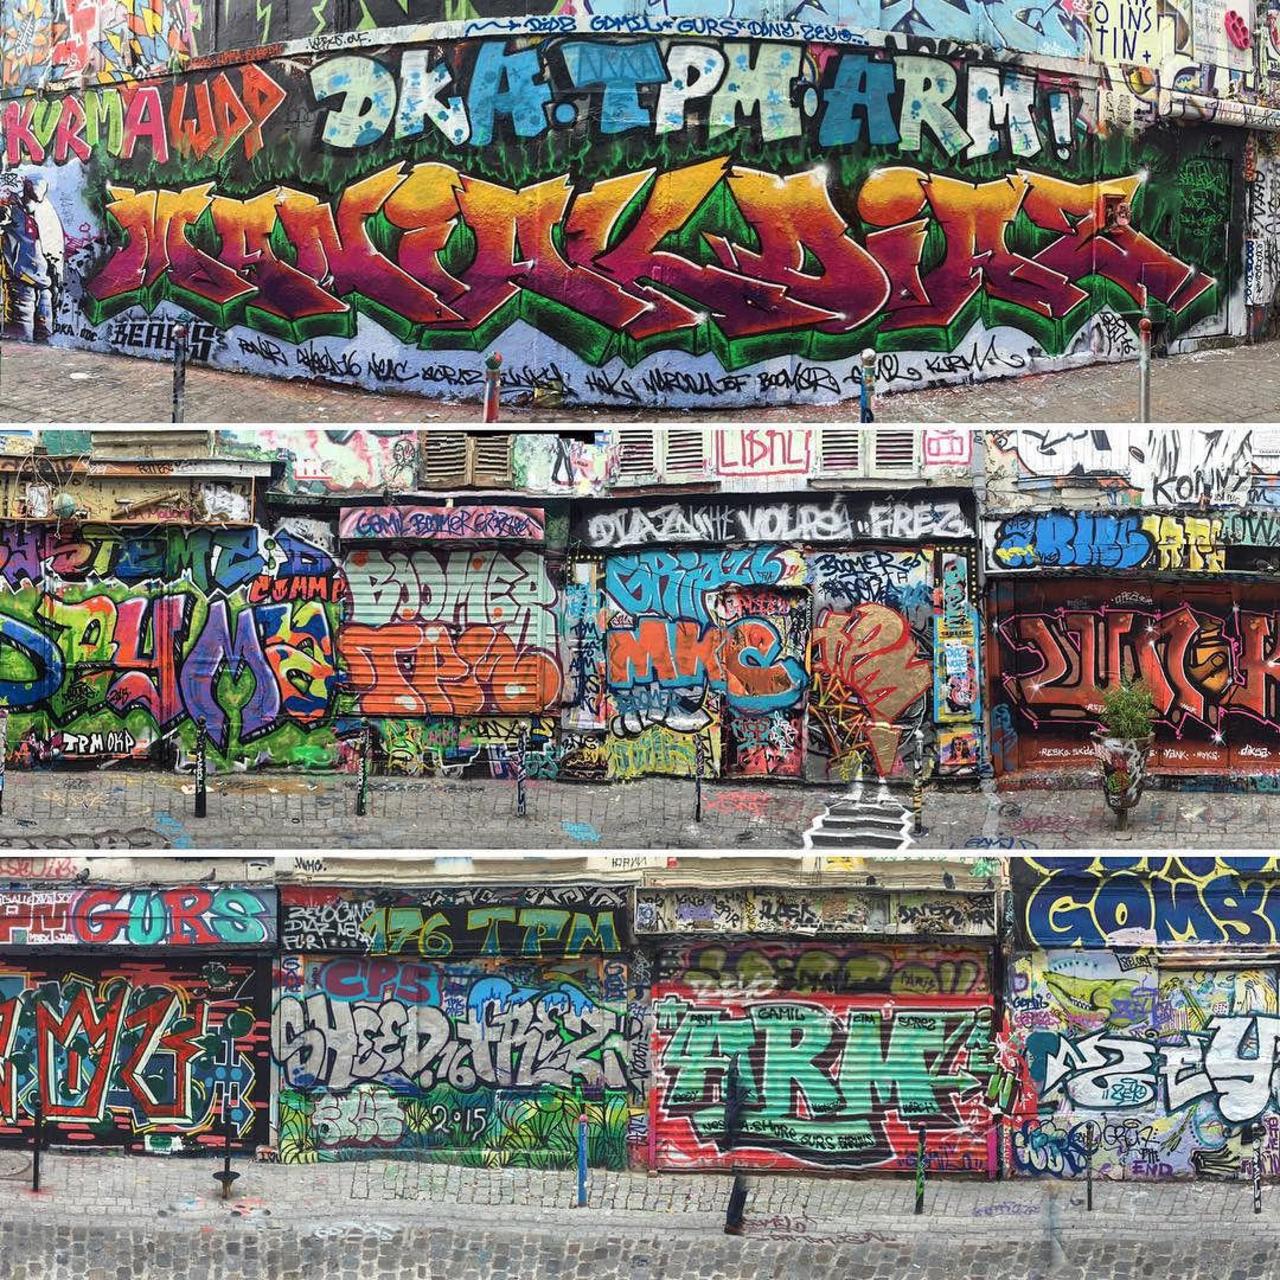 #Paris #graffiti photo by @catscoffeecreativity http://ift.tt/1ZLObwc #StreetArt http://t.co/V6XrLsbkc3